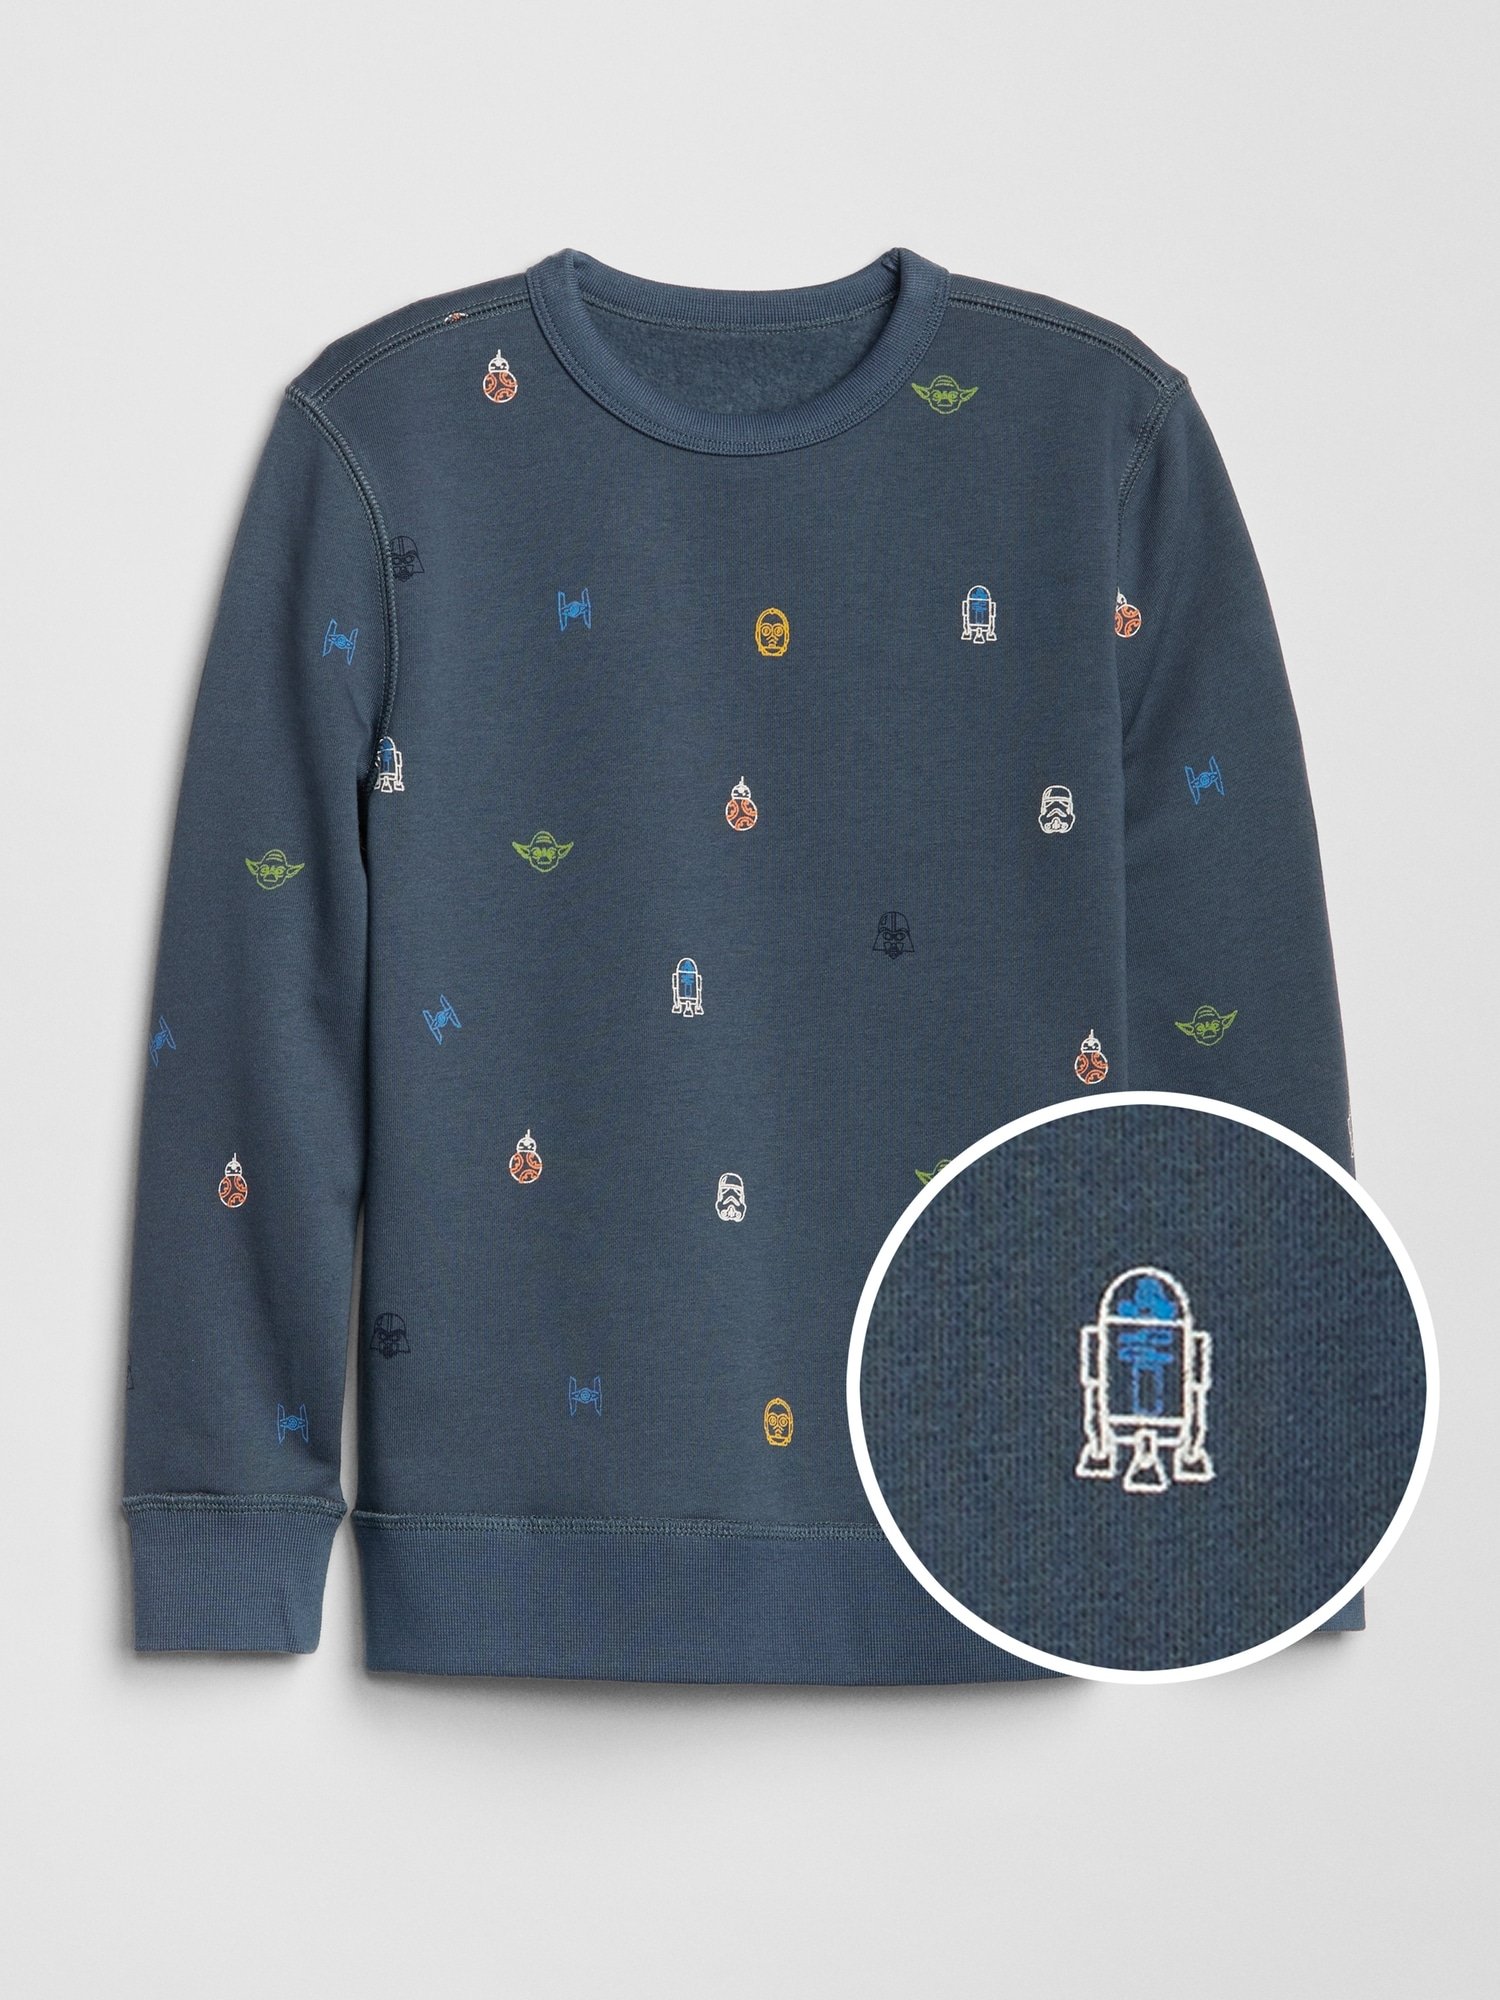 Star Wars Sweatshirt product image